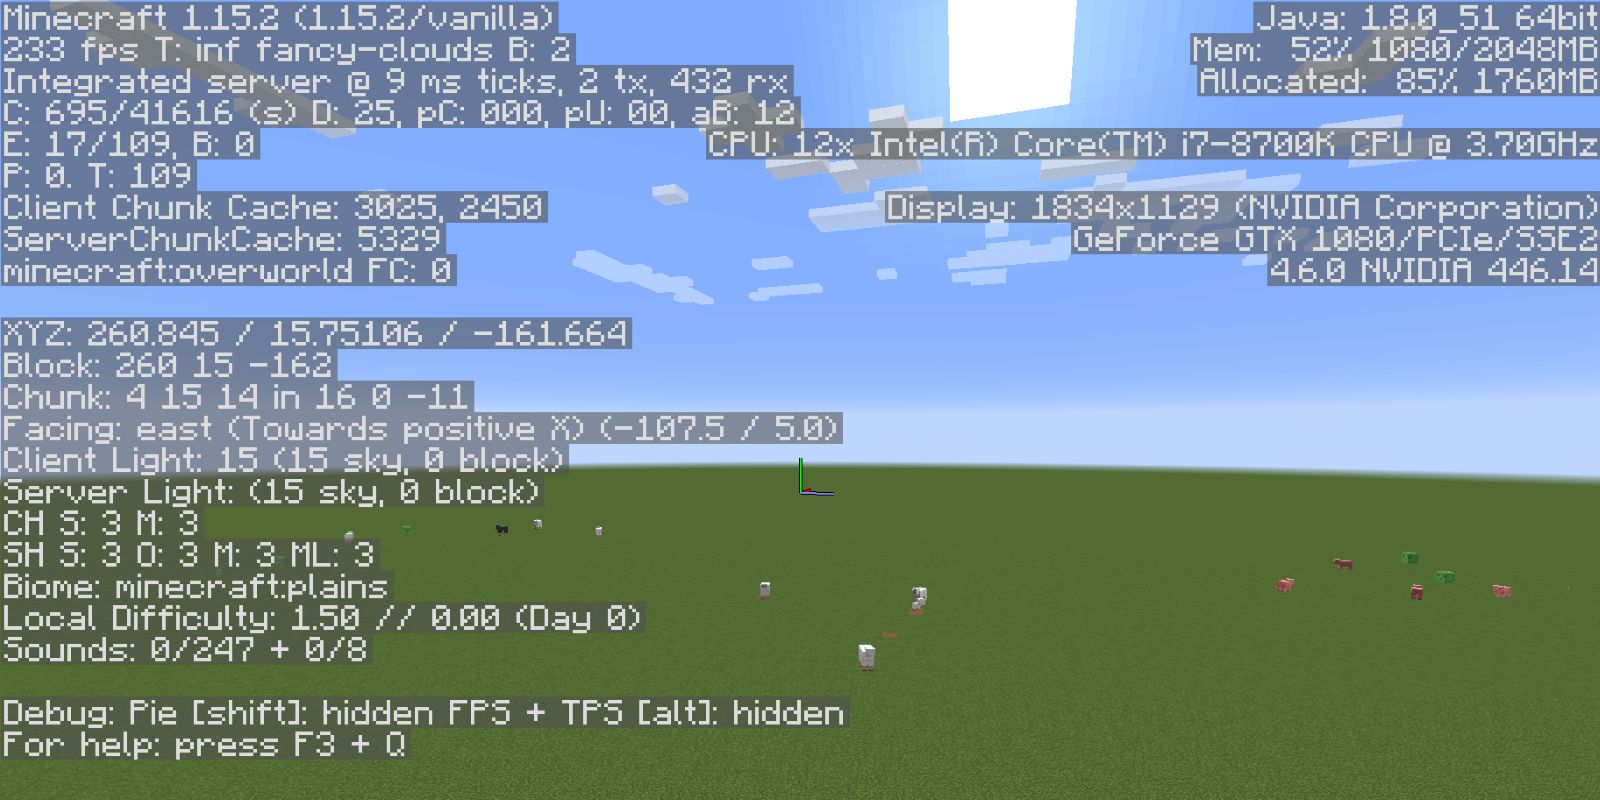 The F3 screen in Minecraft